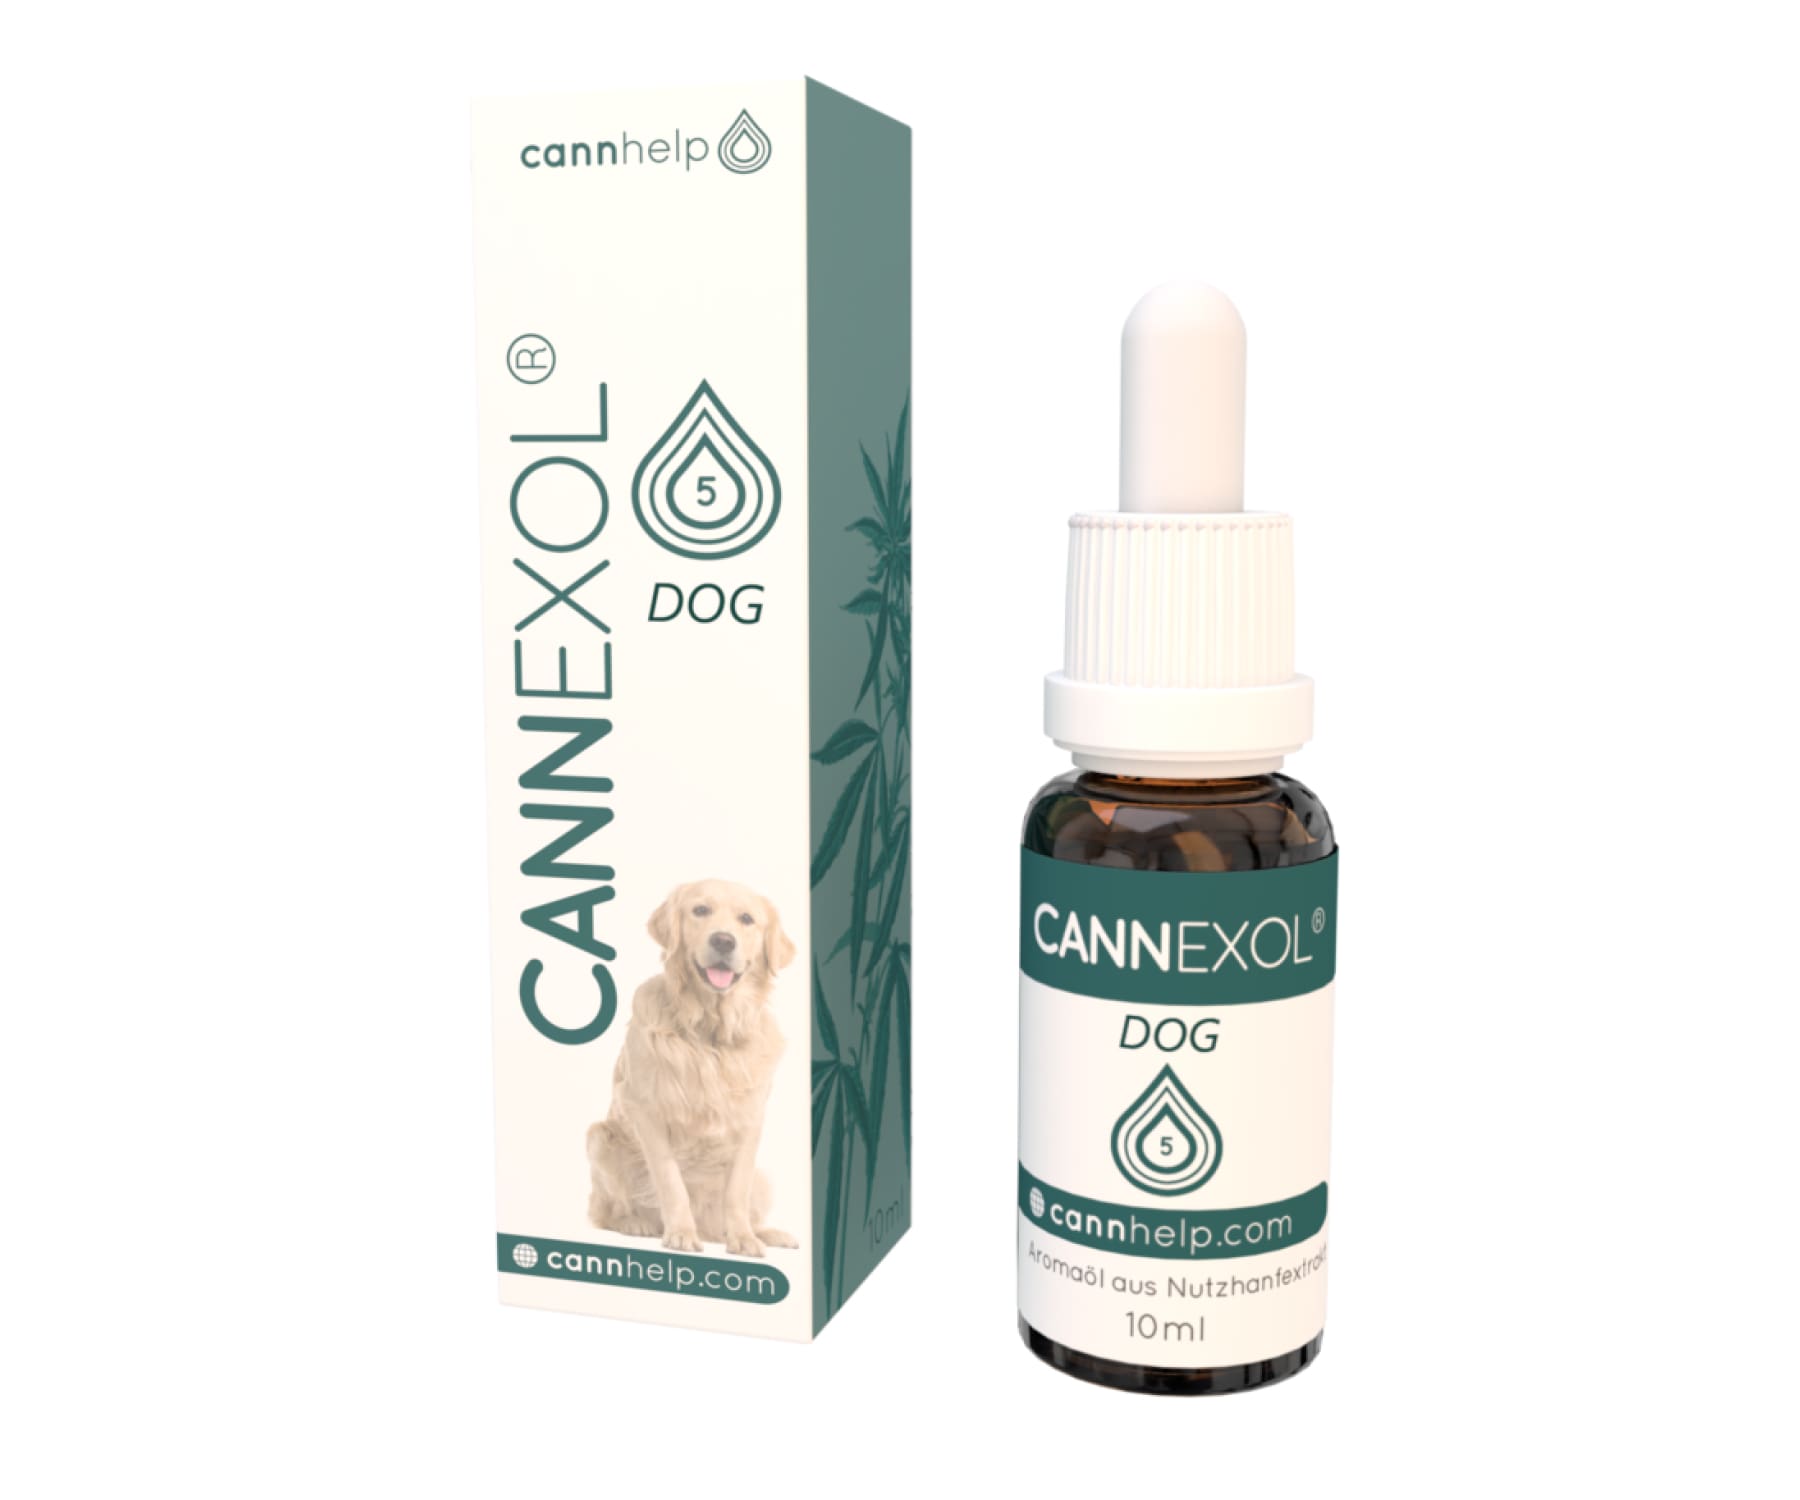 Hanf und Hemp - Cannexol Dog CBD Öl für Hunde 5% - 500mg